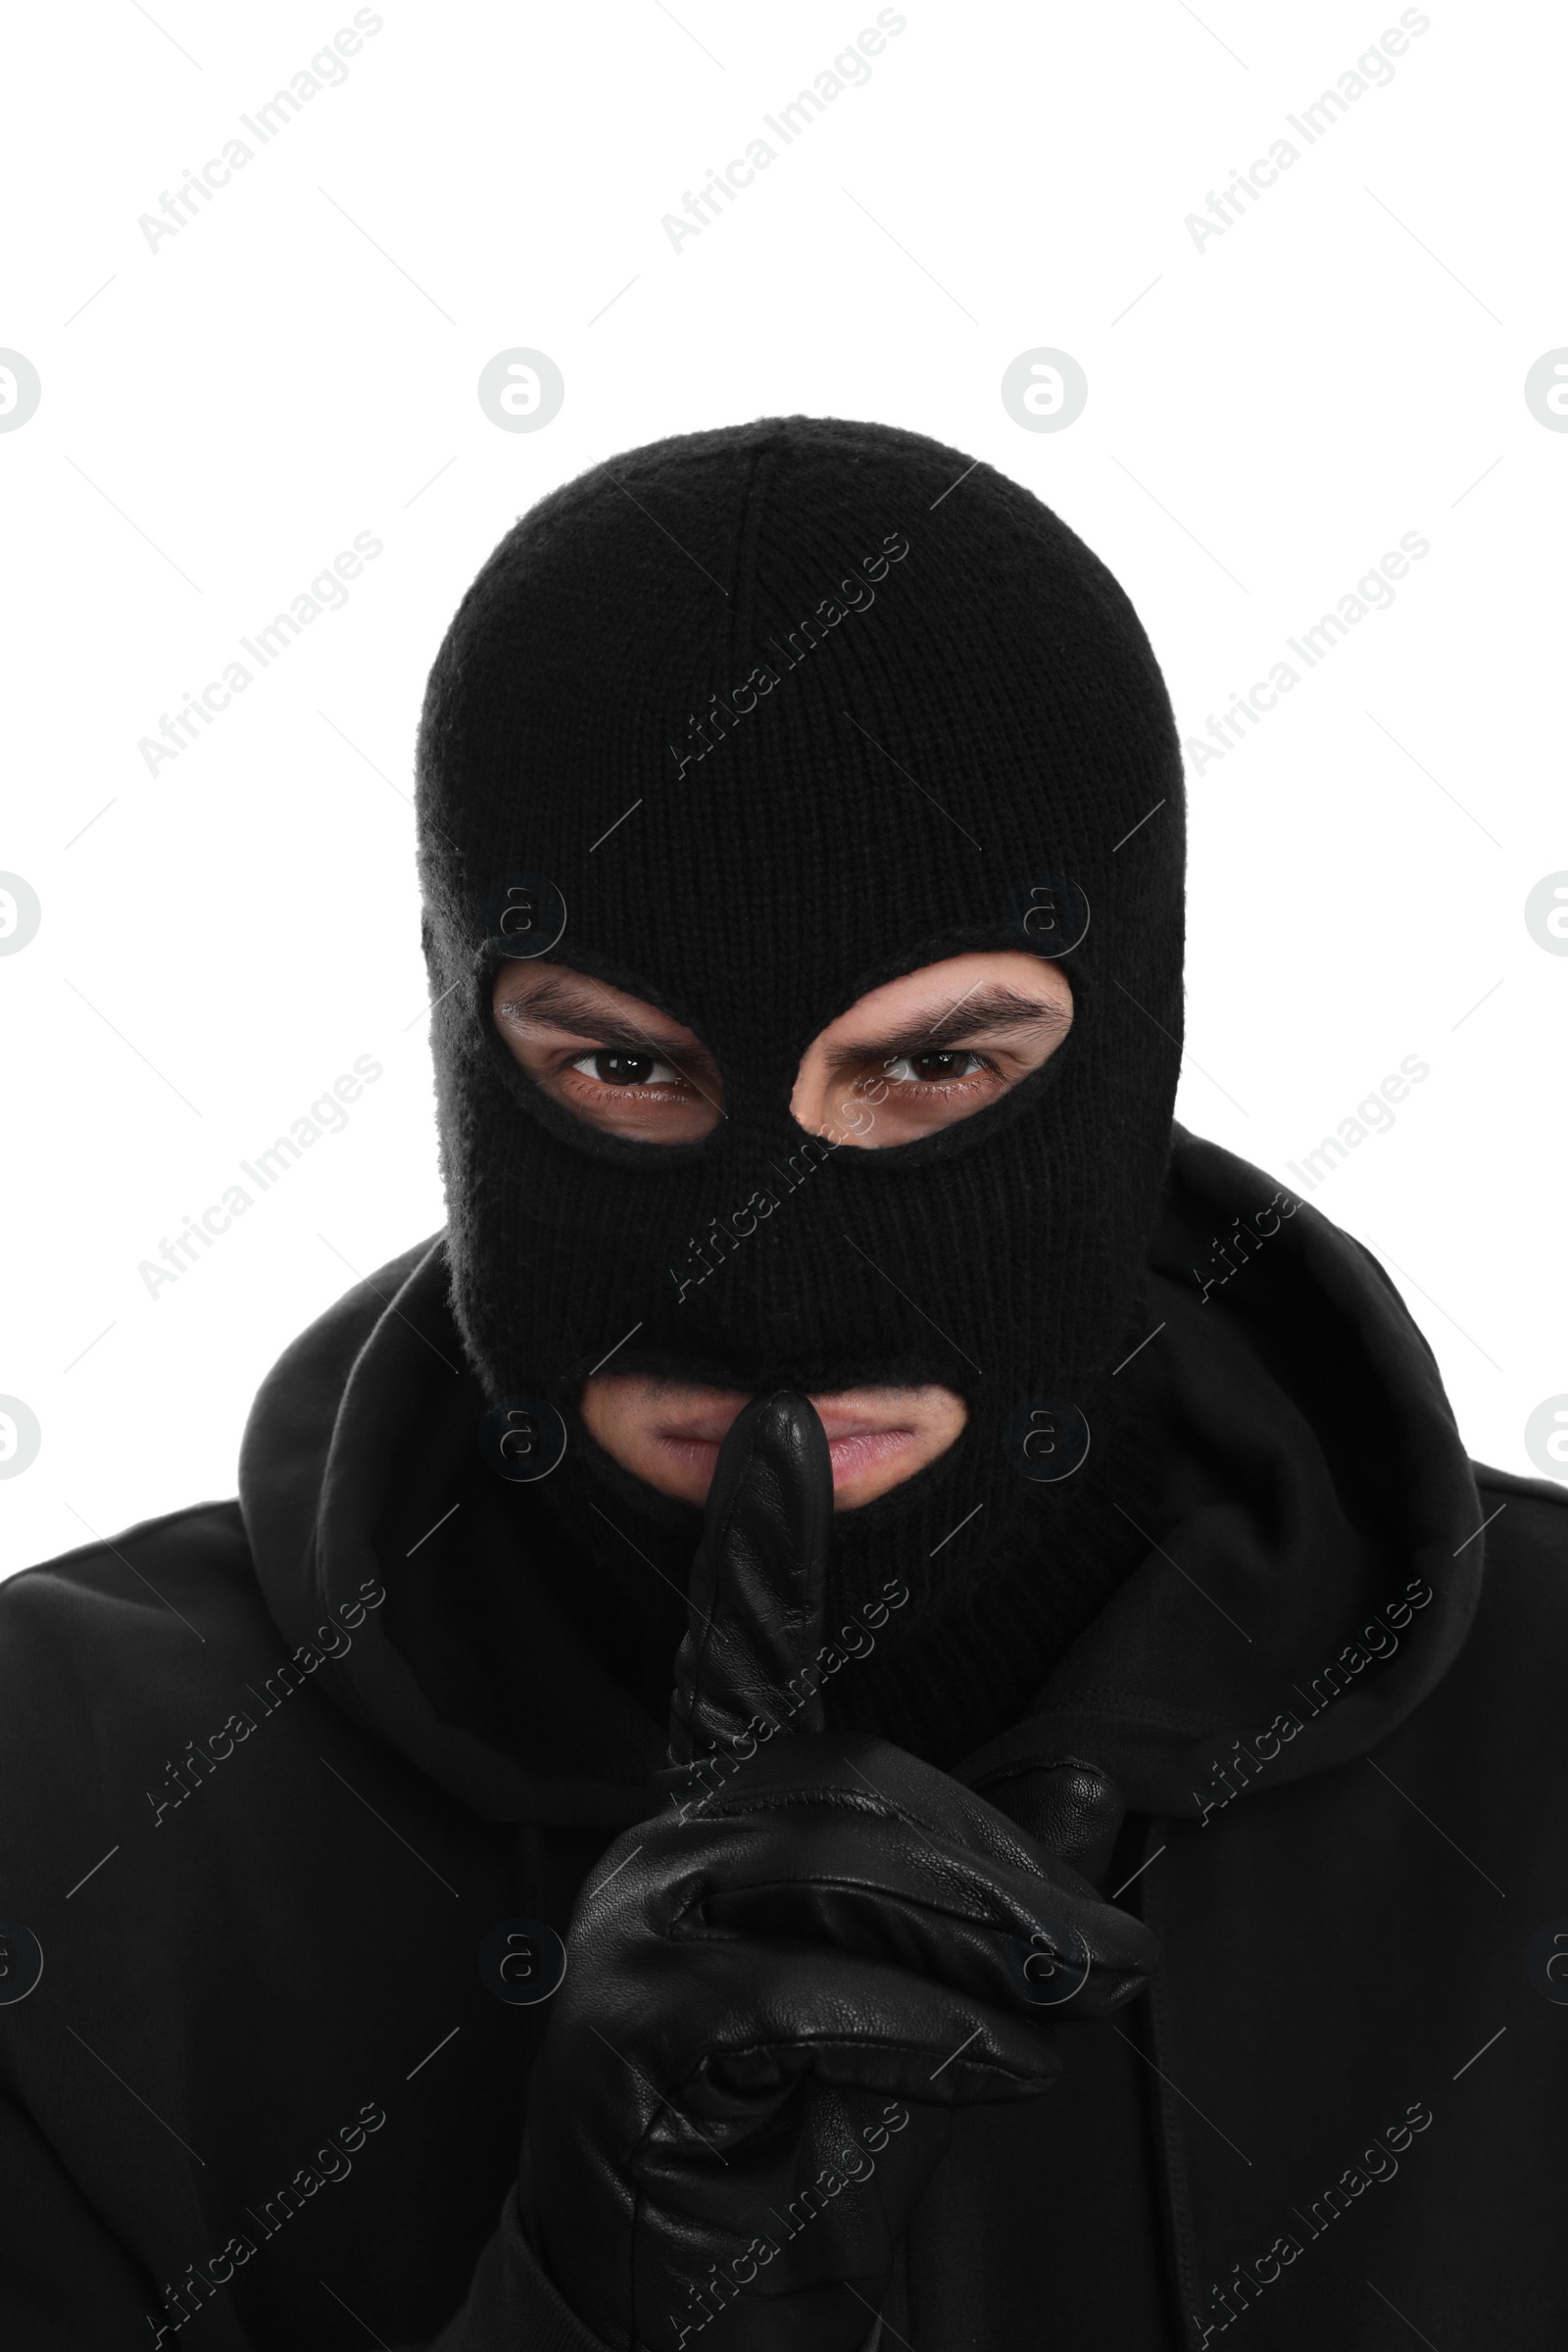 Photo of Man wearing black balaclava on white background